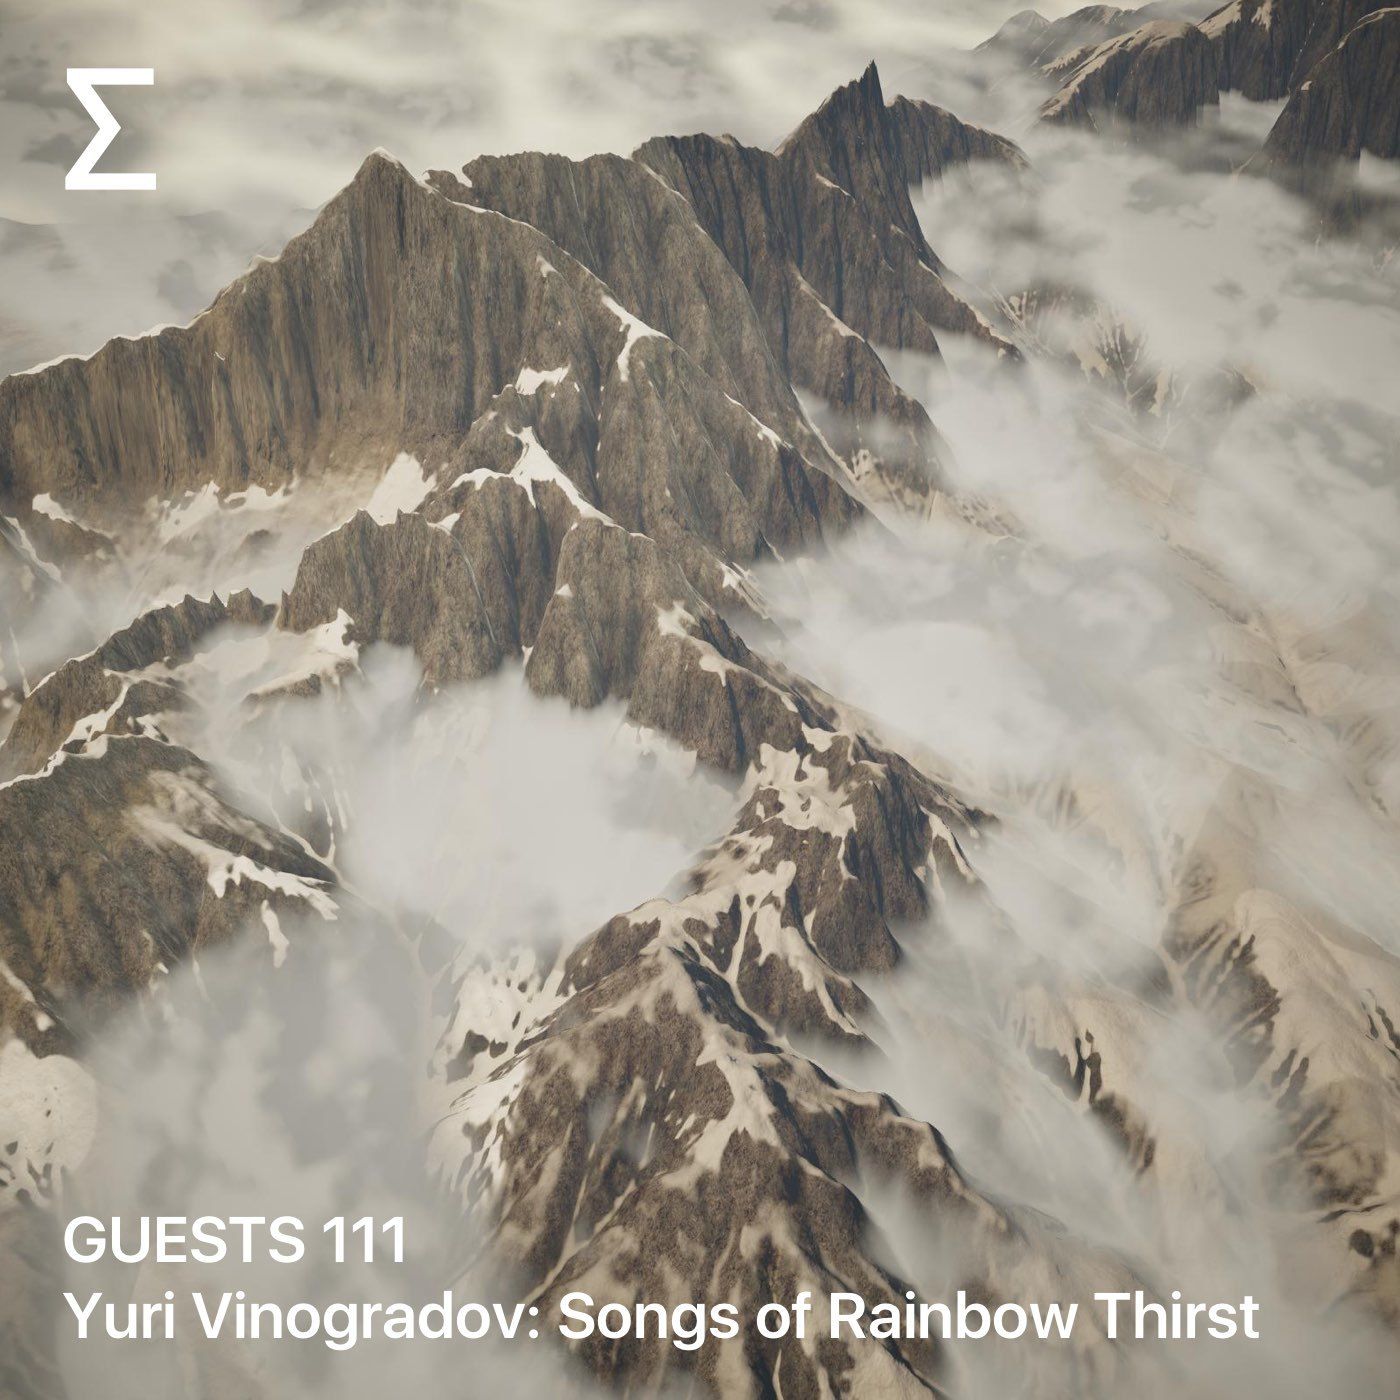 GUESTS 111 – Yuri Vinogradov: Songs of Rainbow Thirst